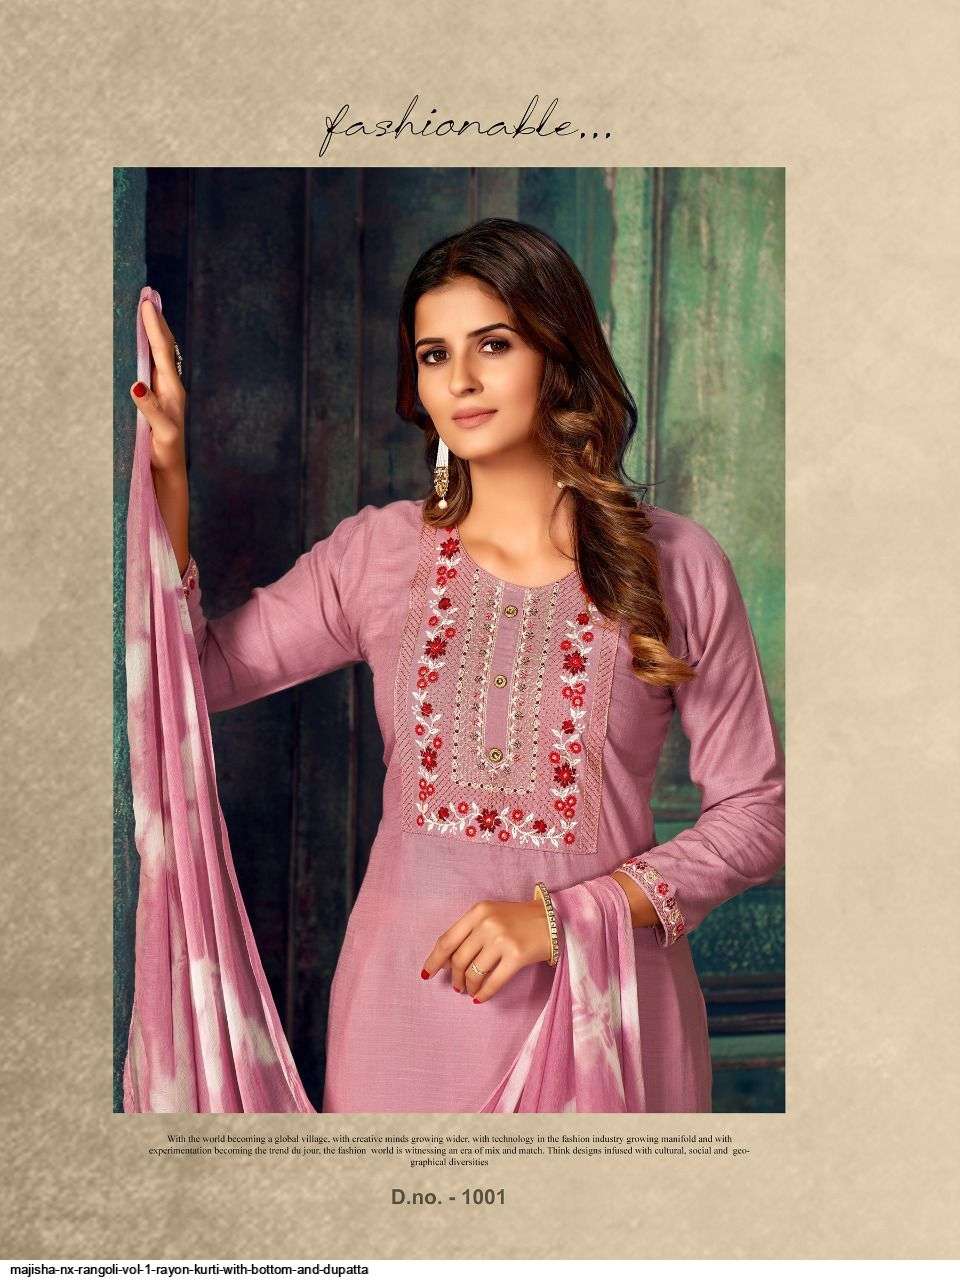 majisha nx present rangoli vol 1 rayon designer kurti pant with dupatta in wholesale price in surat sai dresses 1 2022 08 24 14 17 42